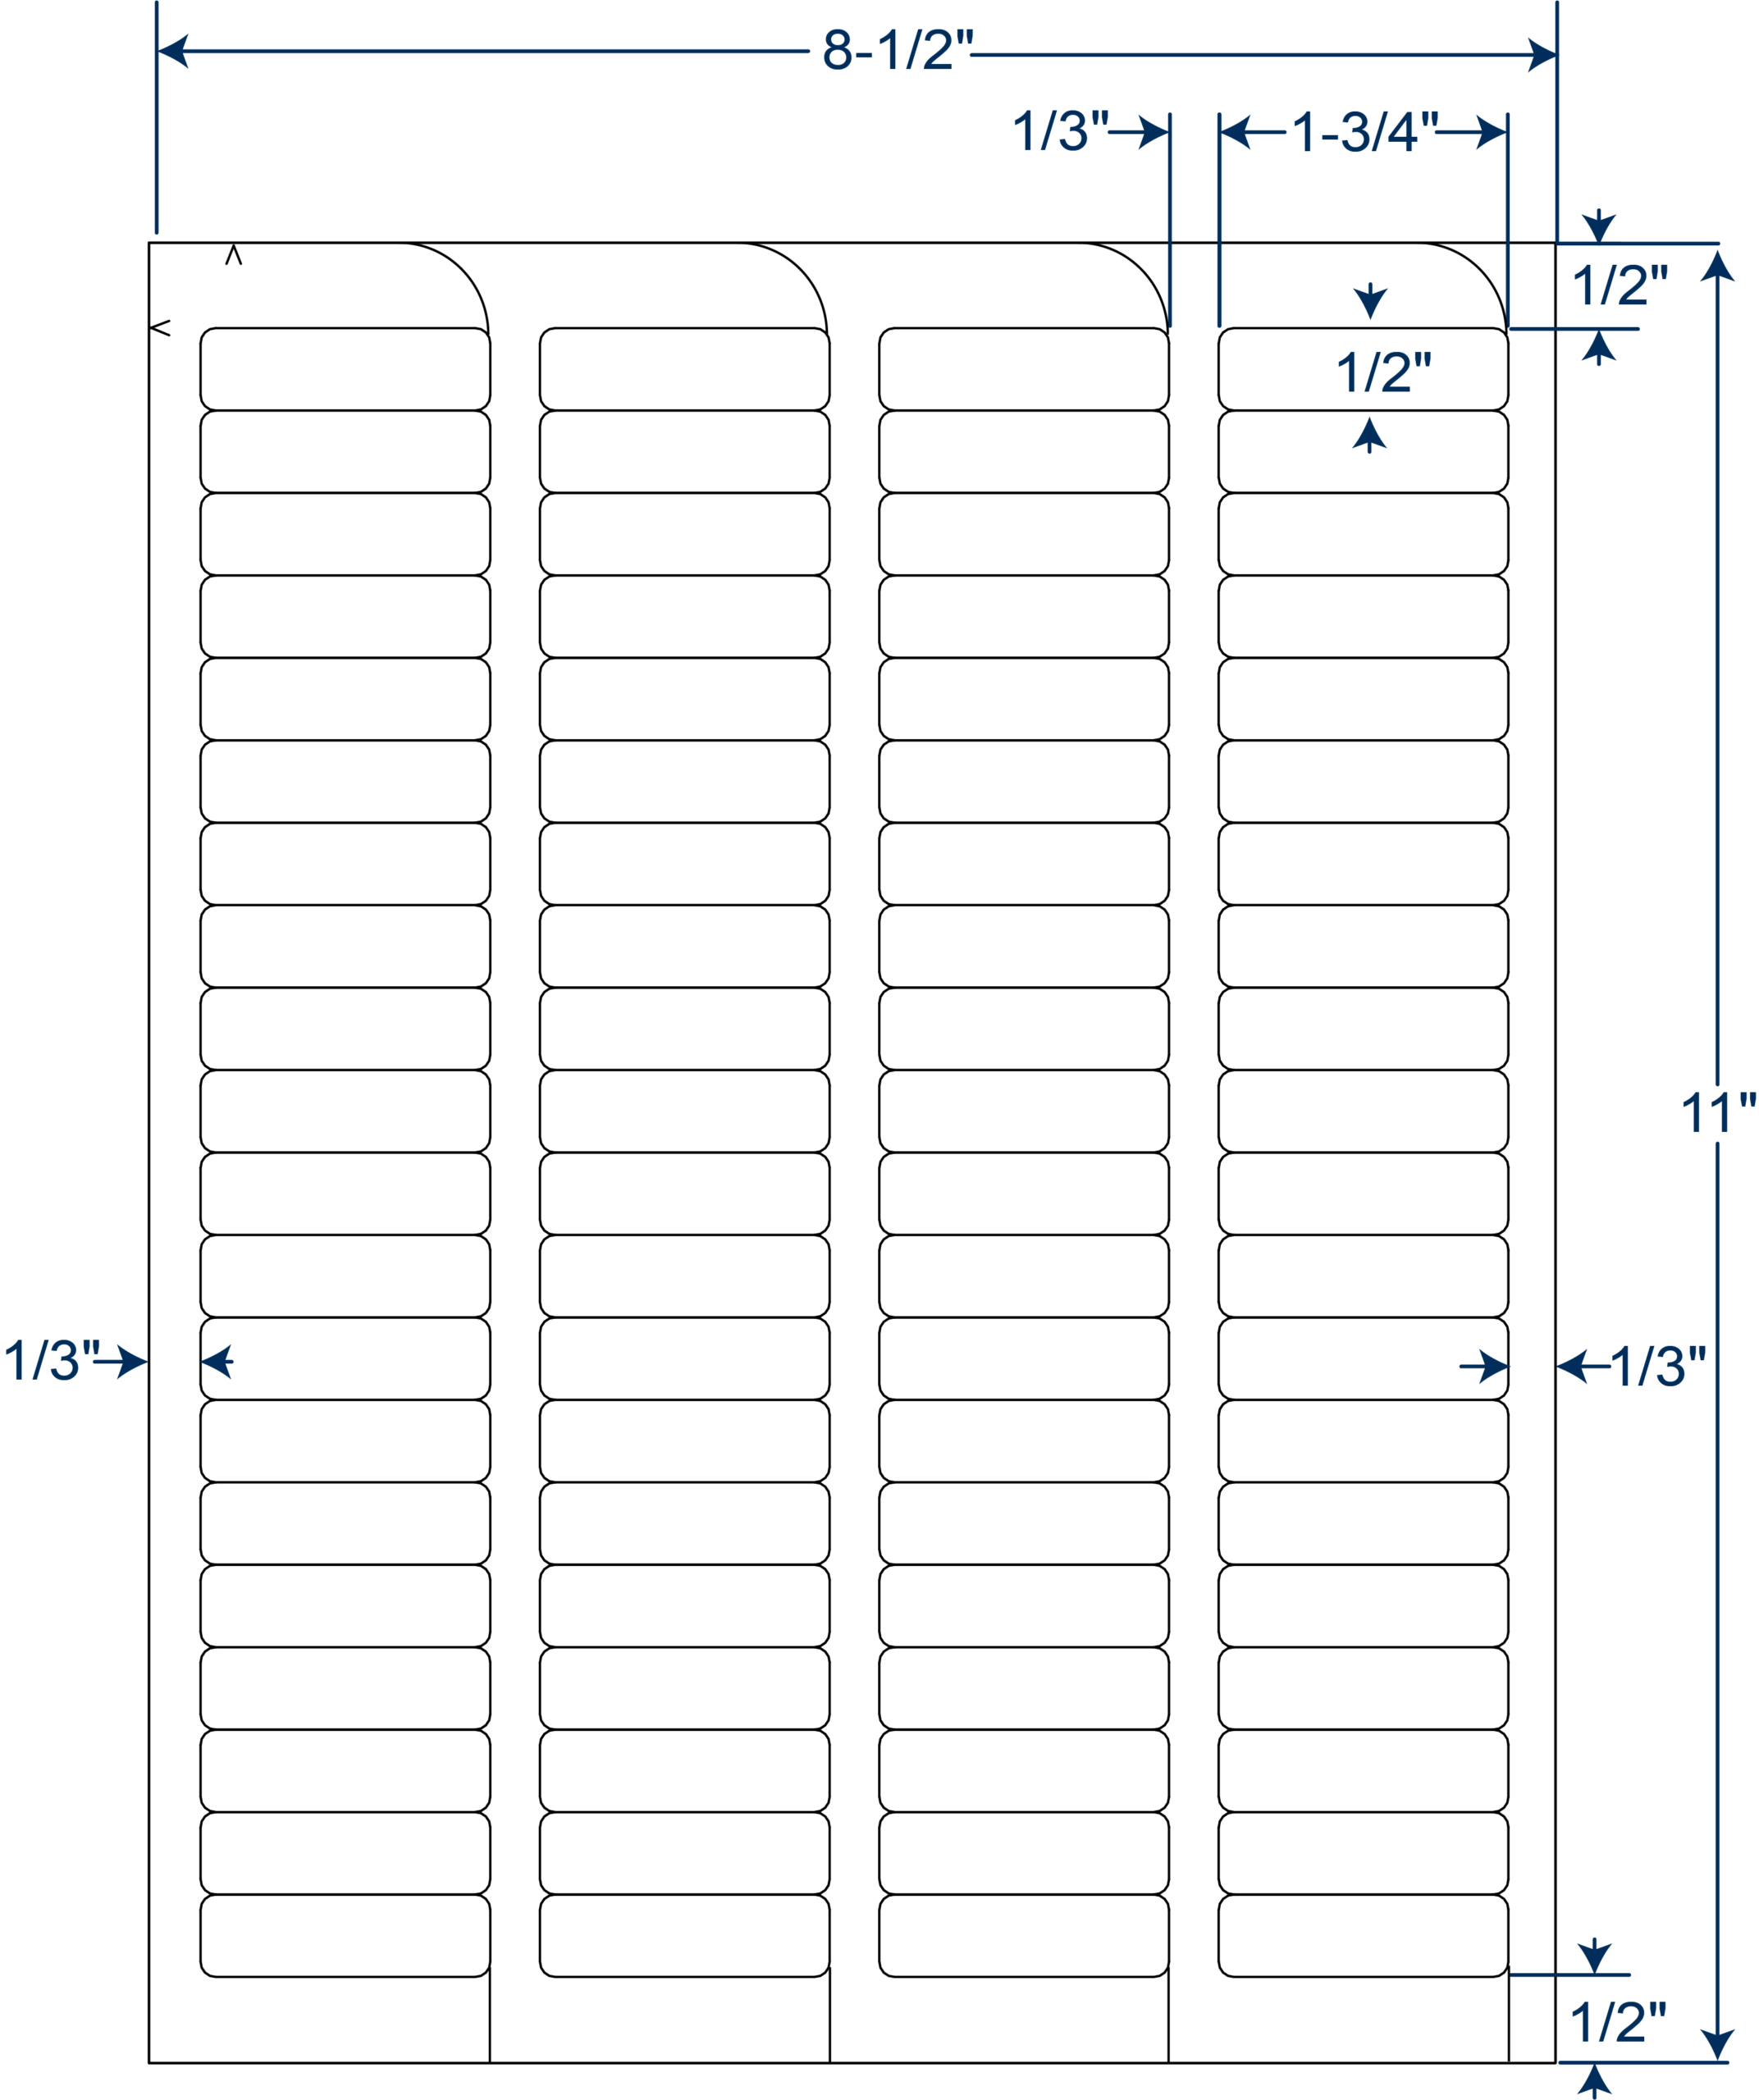 1-3/4" x 1/2" FABTab‰ã¢ Sheeted Labels (250 sheets)